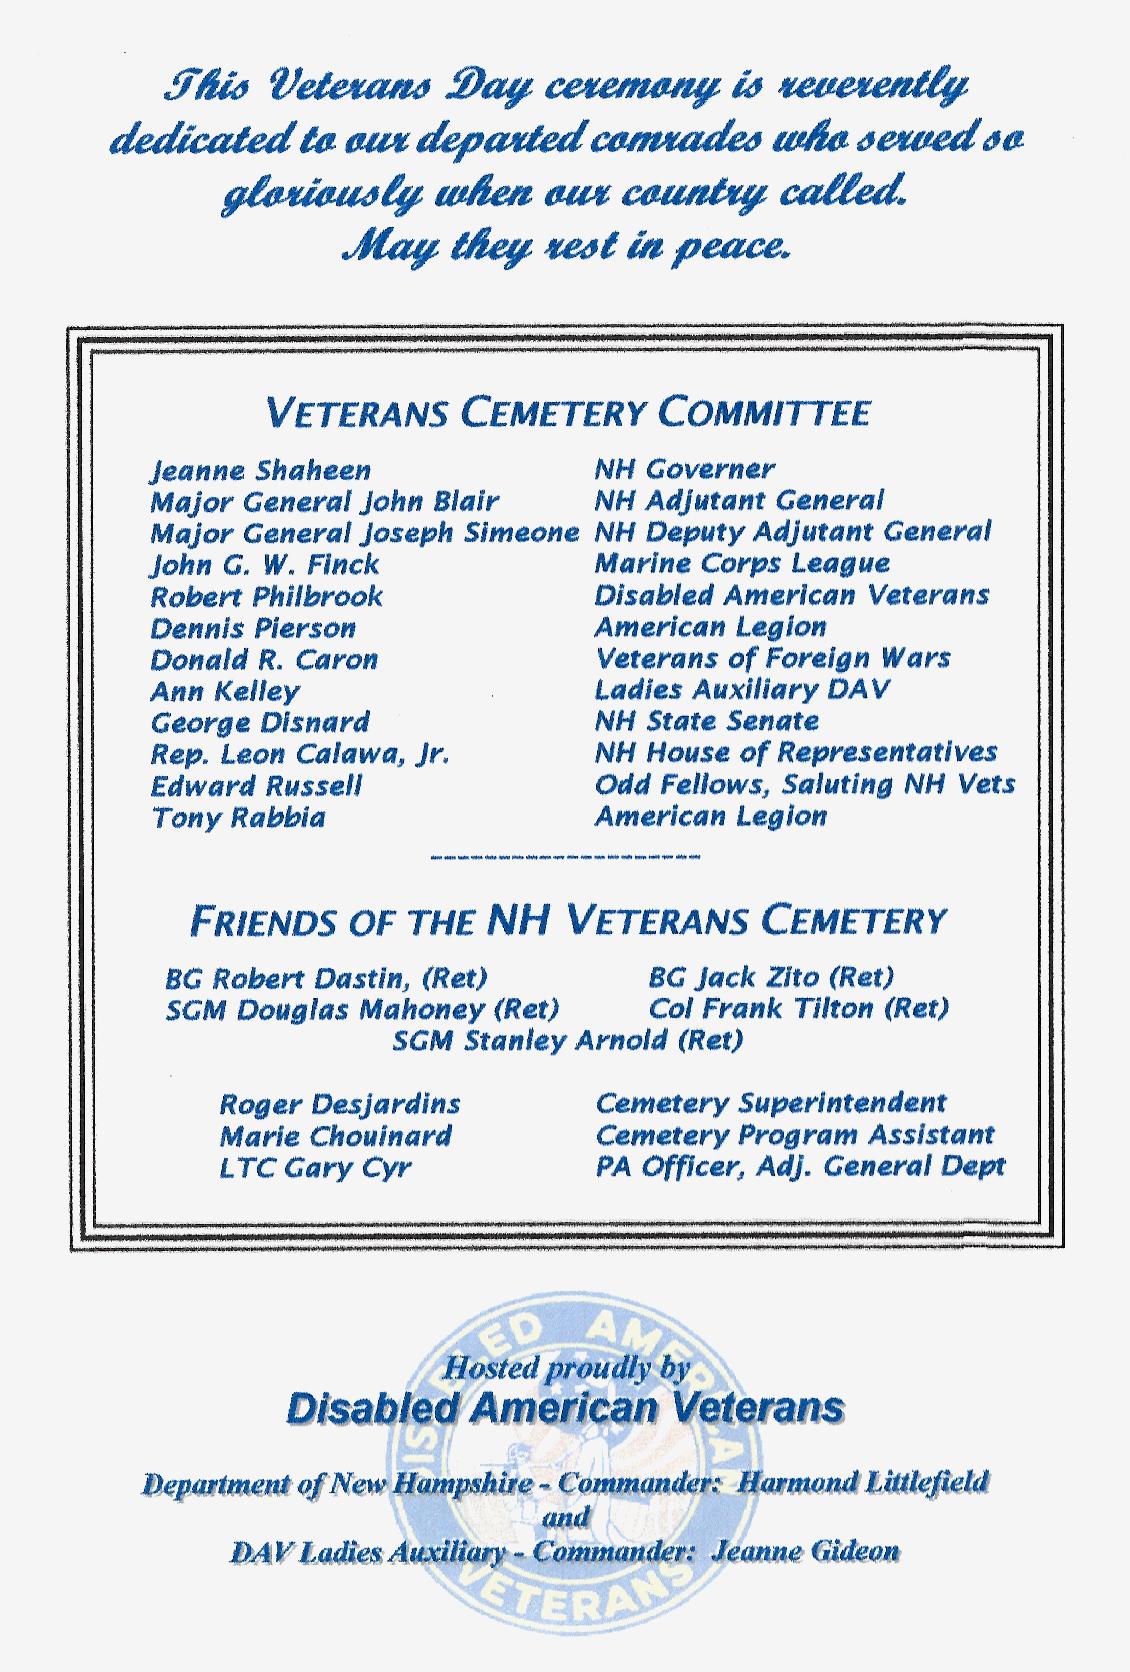 Veterans Day Program at the NH State Veterans Cemetery November 11 2000